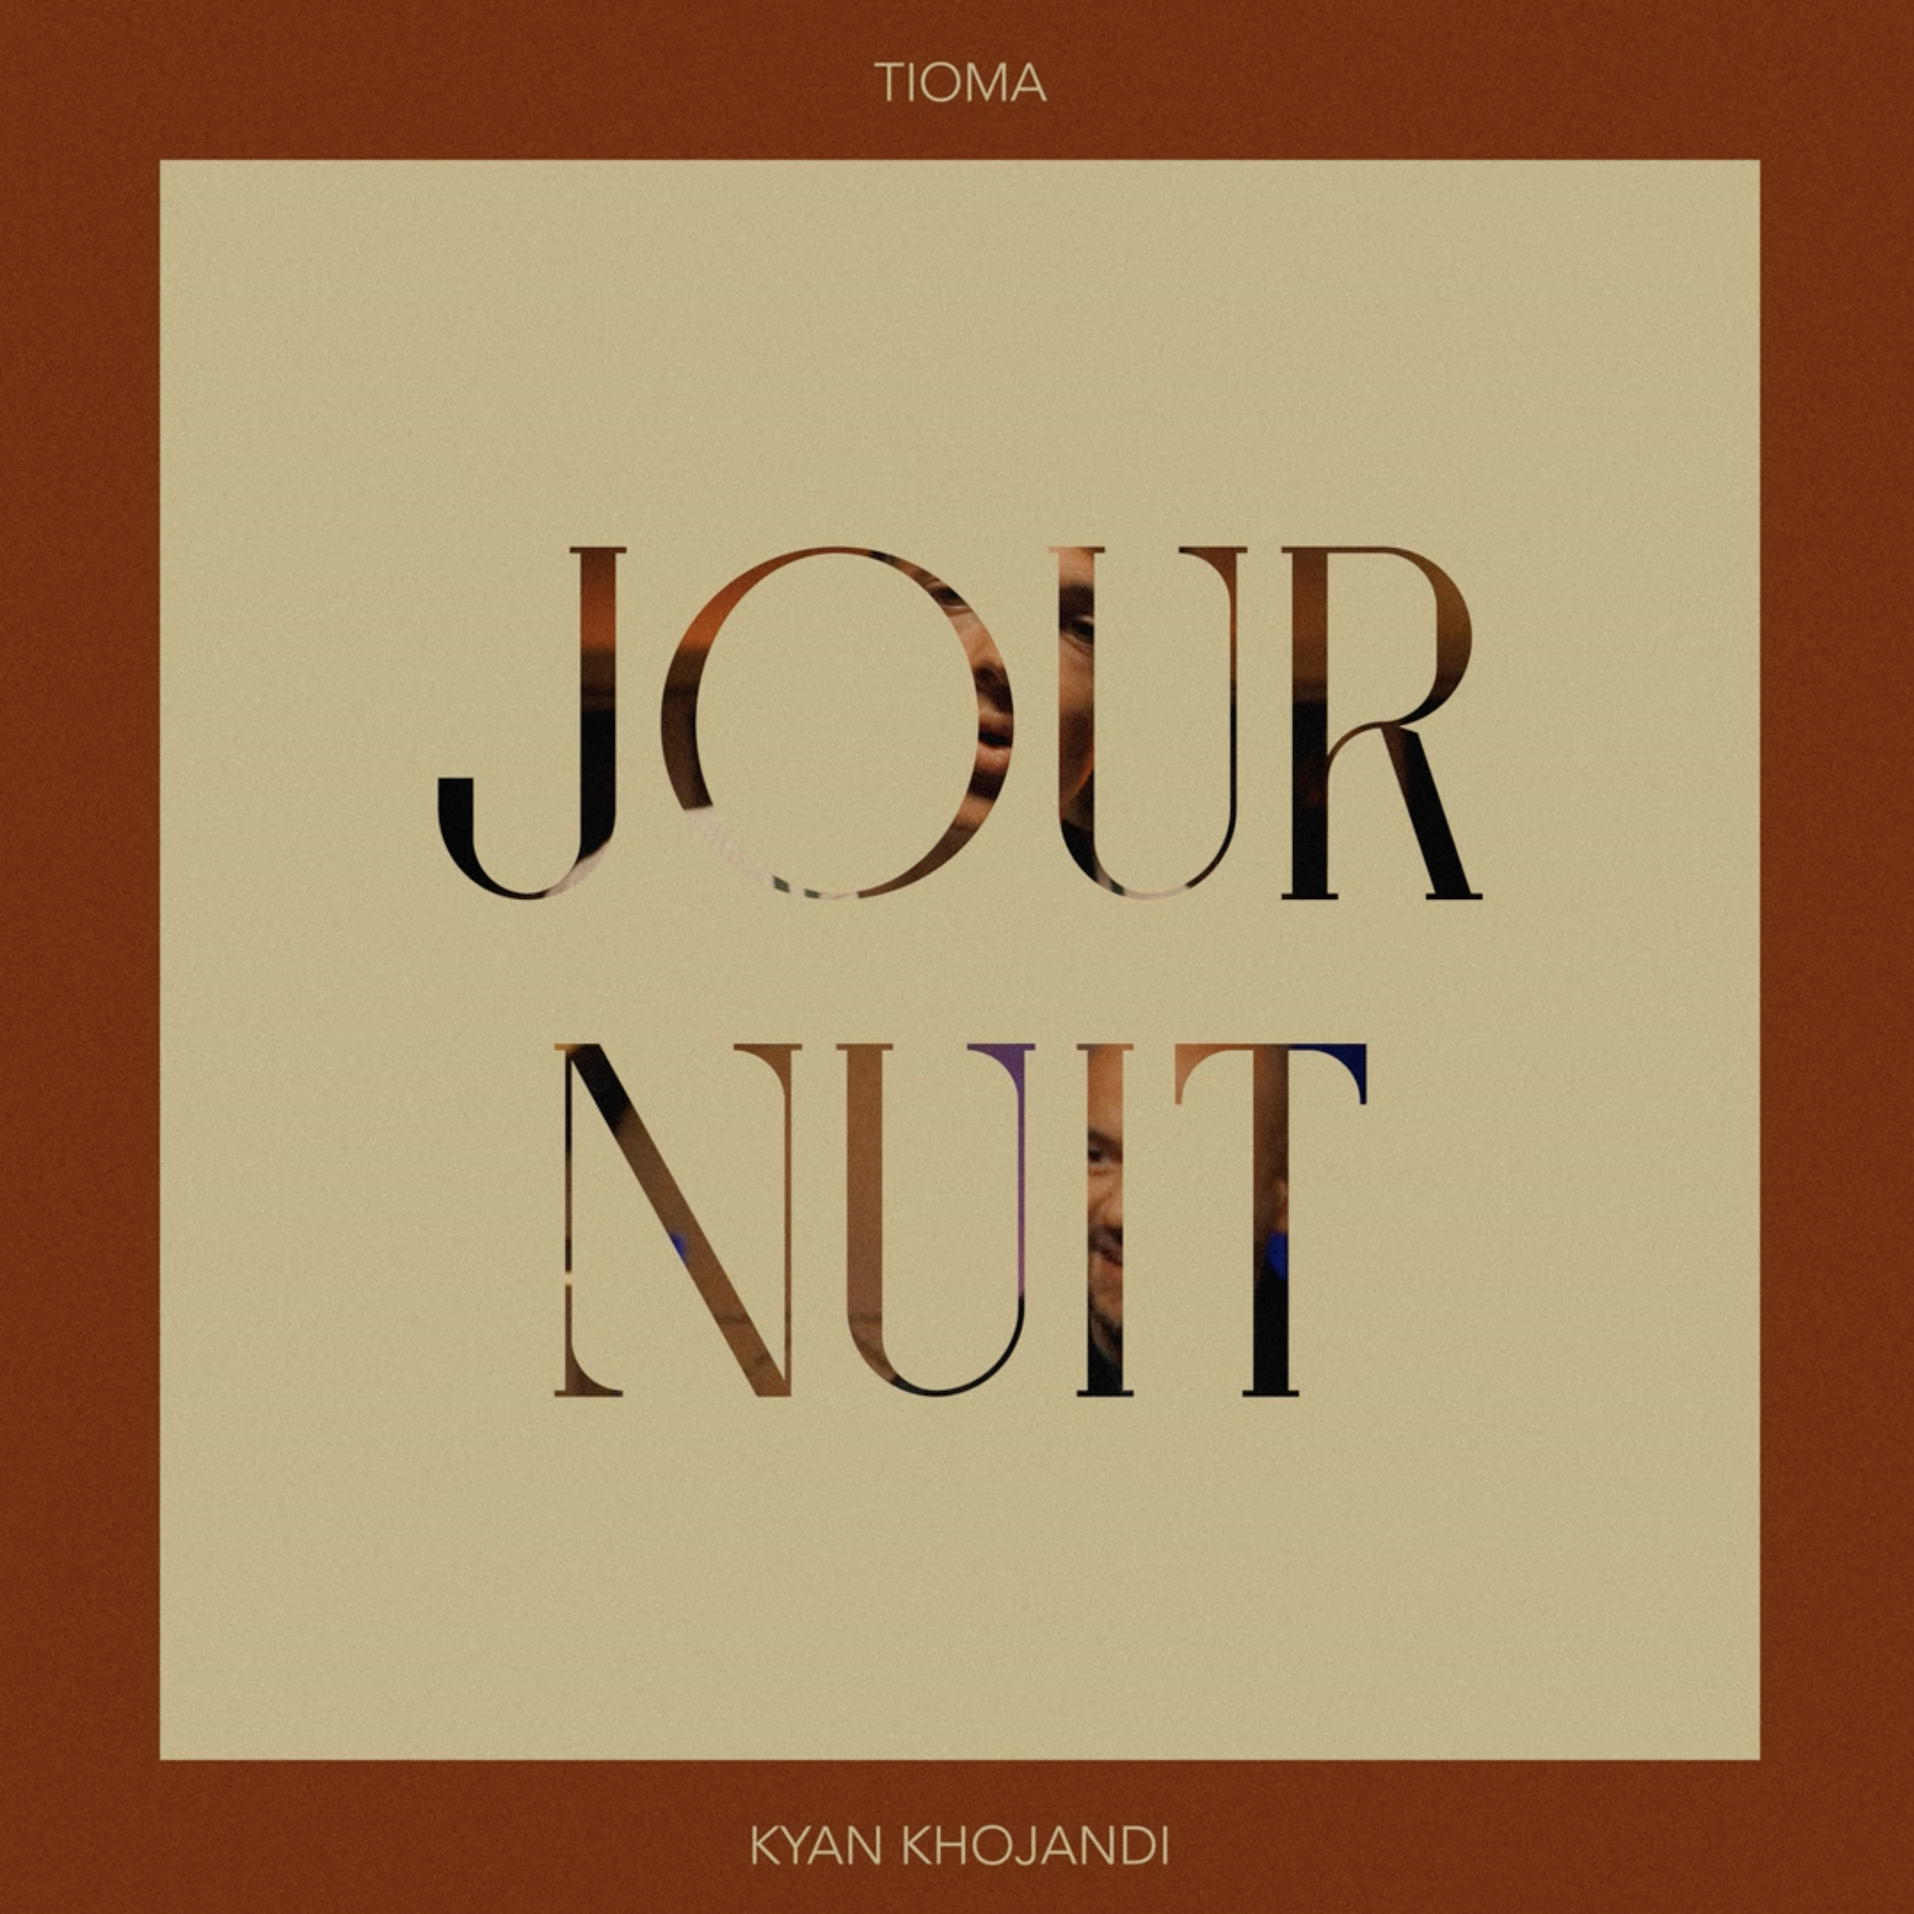 Tioma - Jour ⧸ nuit Ft. Kyan Khojandi